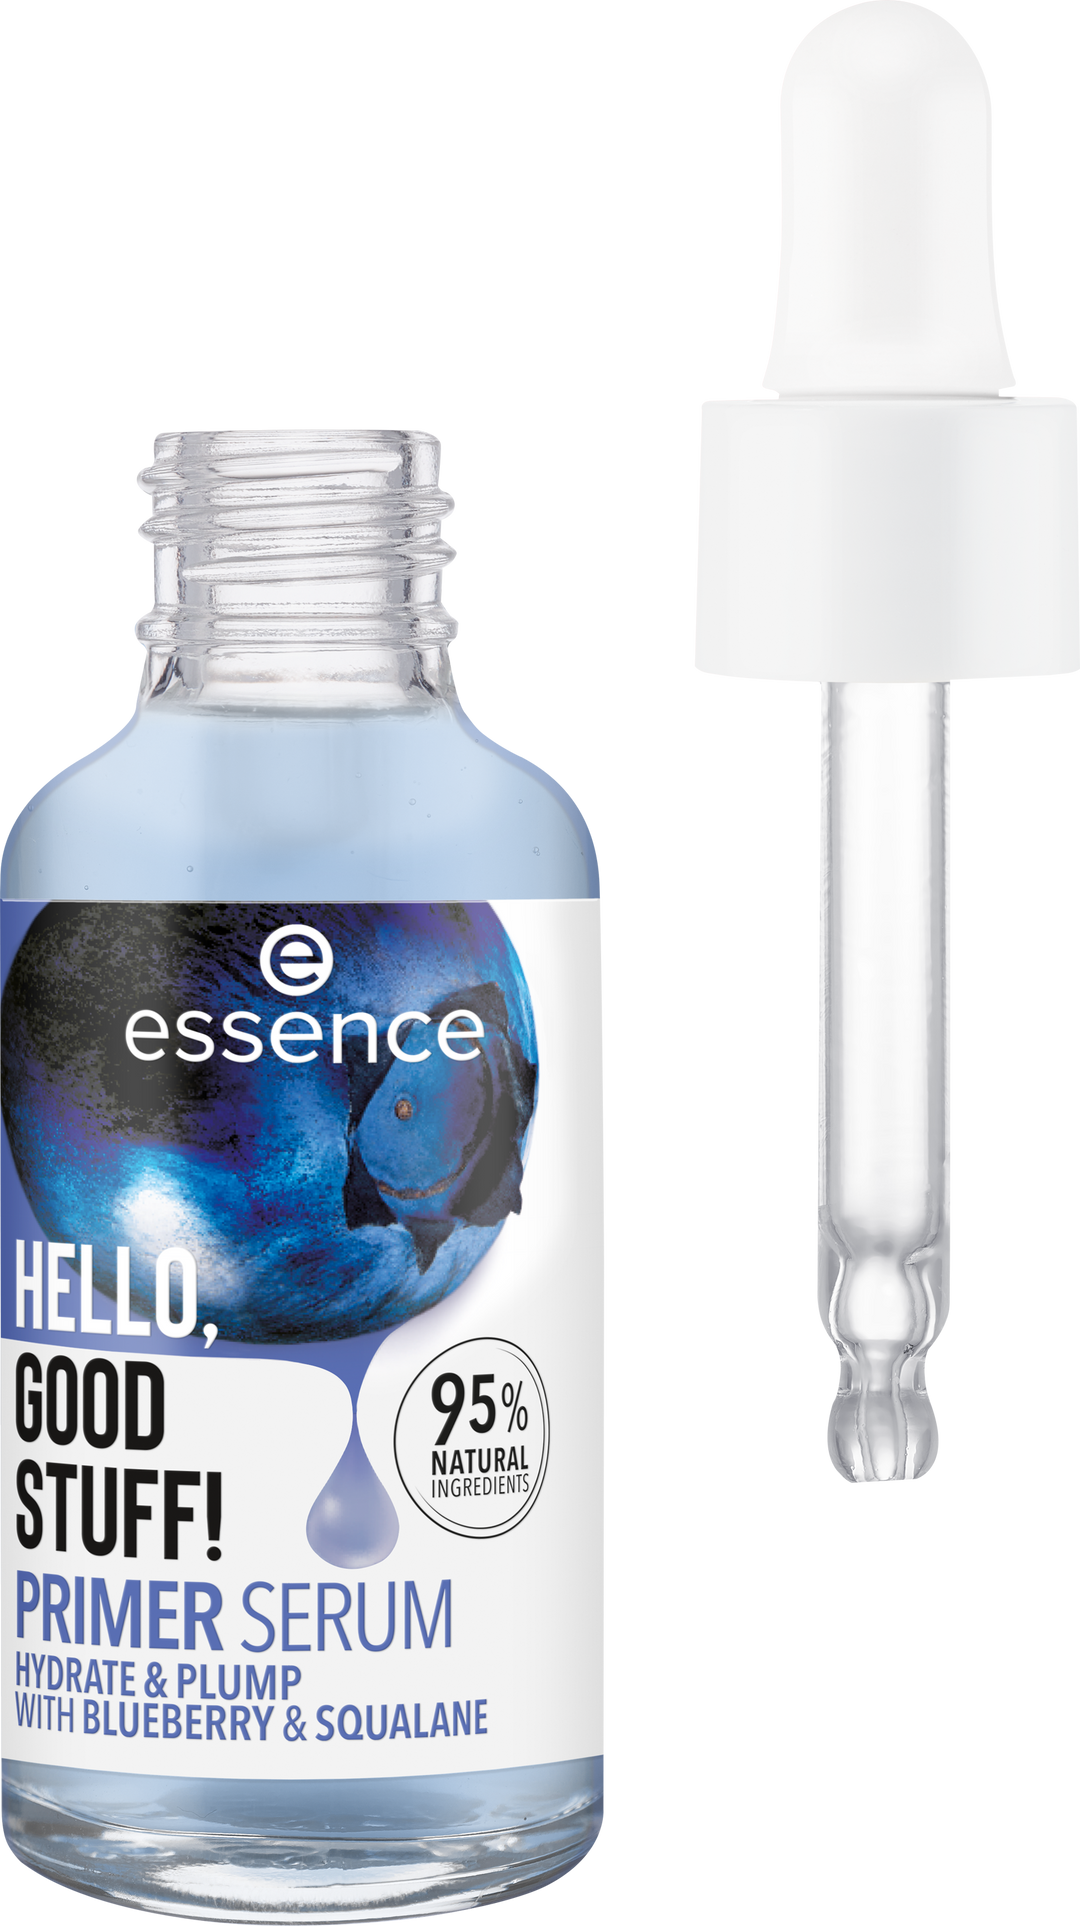 Essence Hello Good Stuff! Prim. Serum